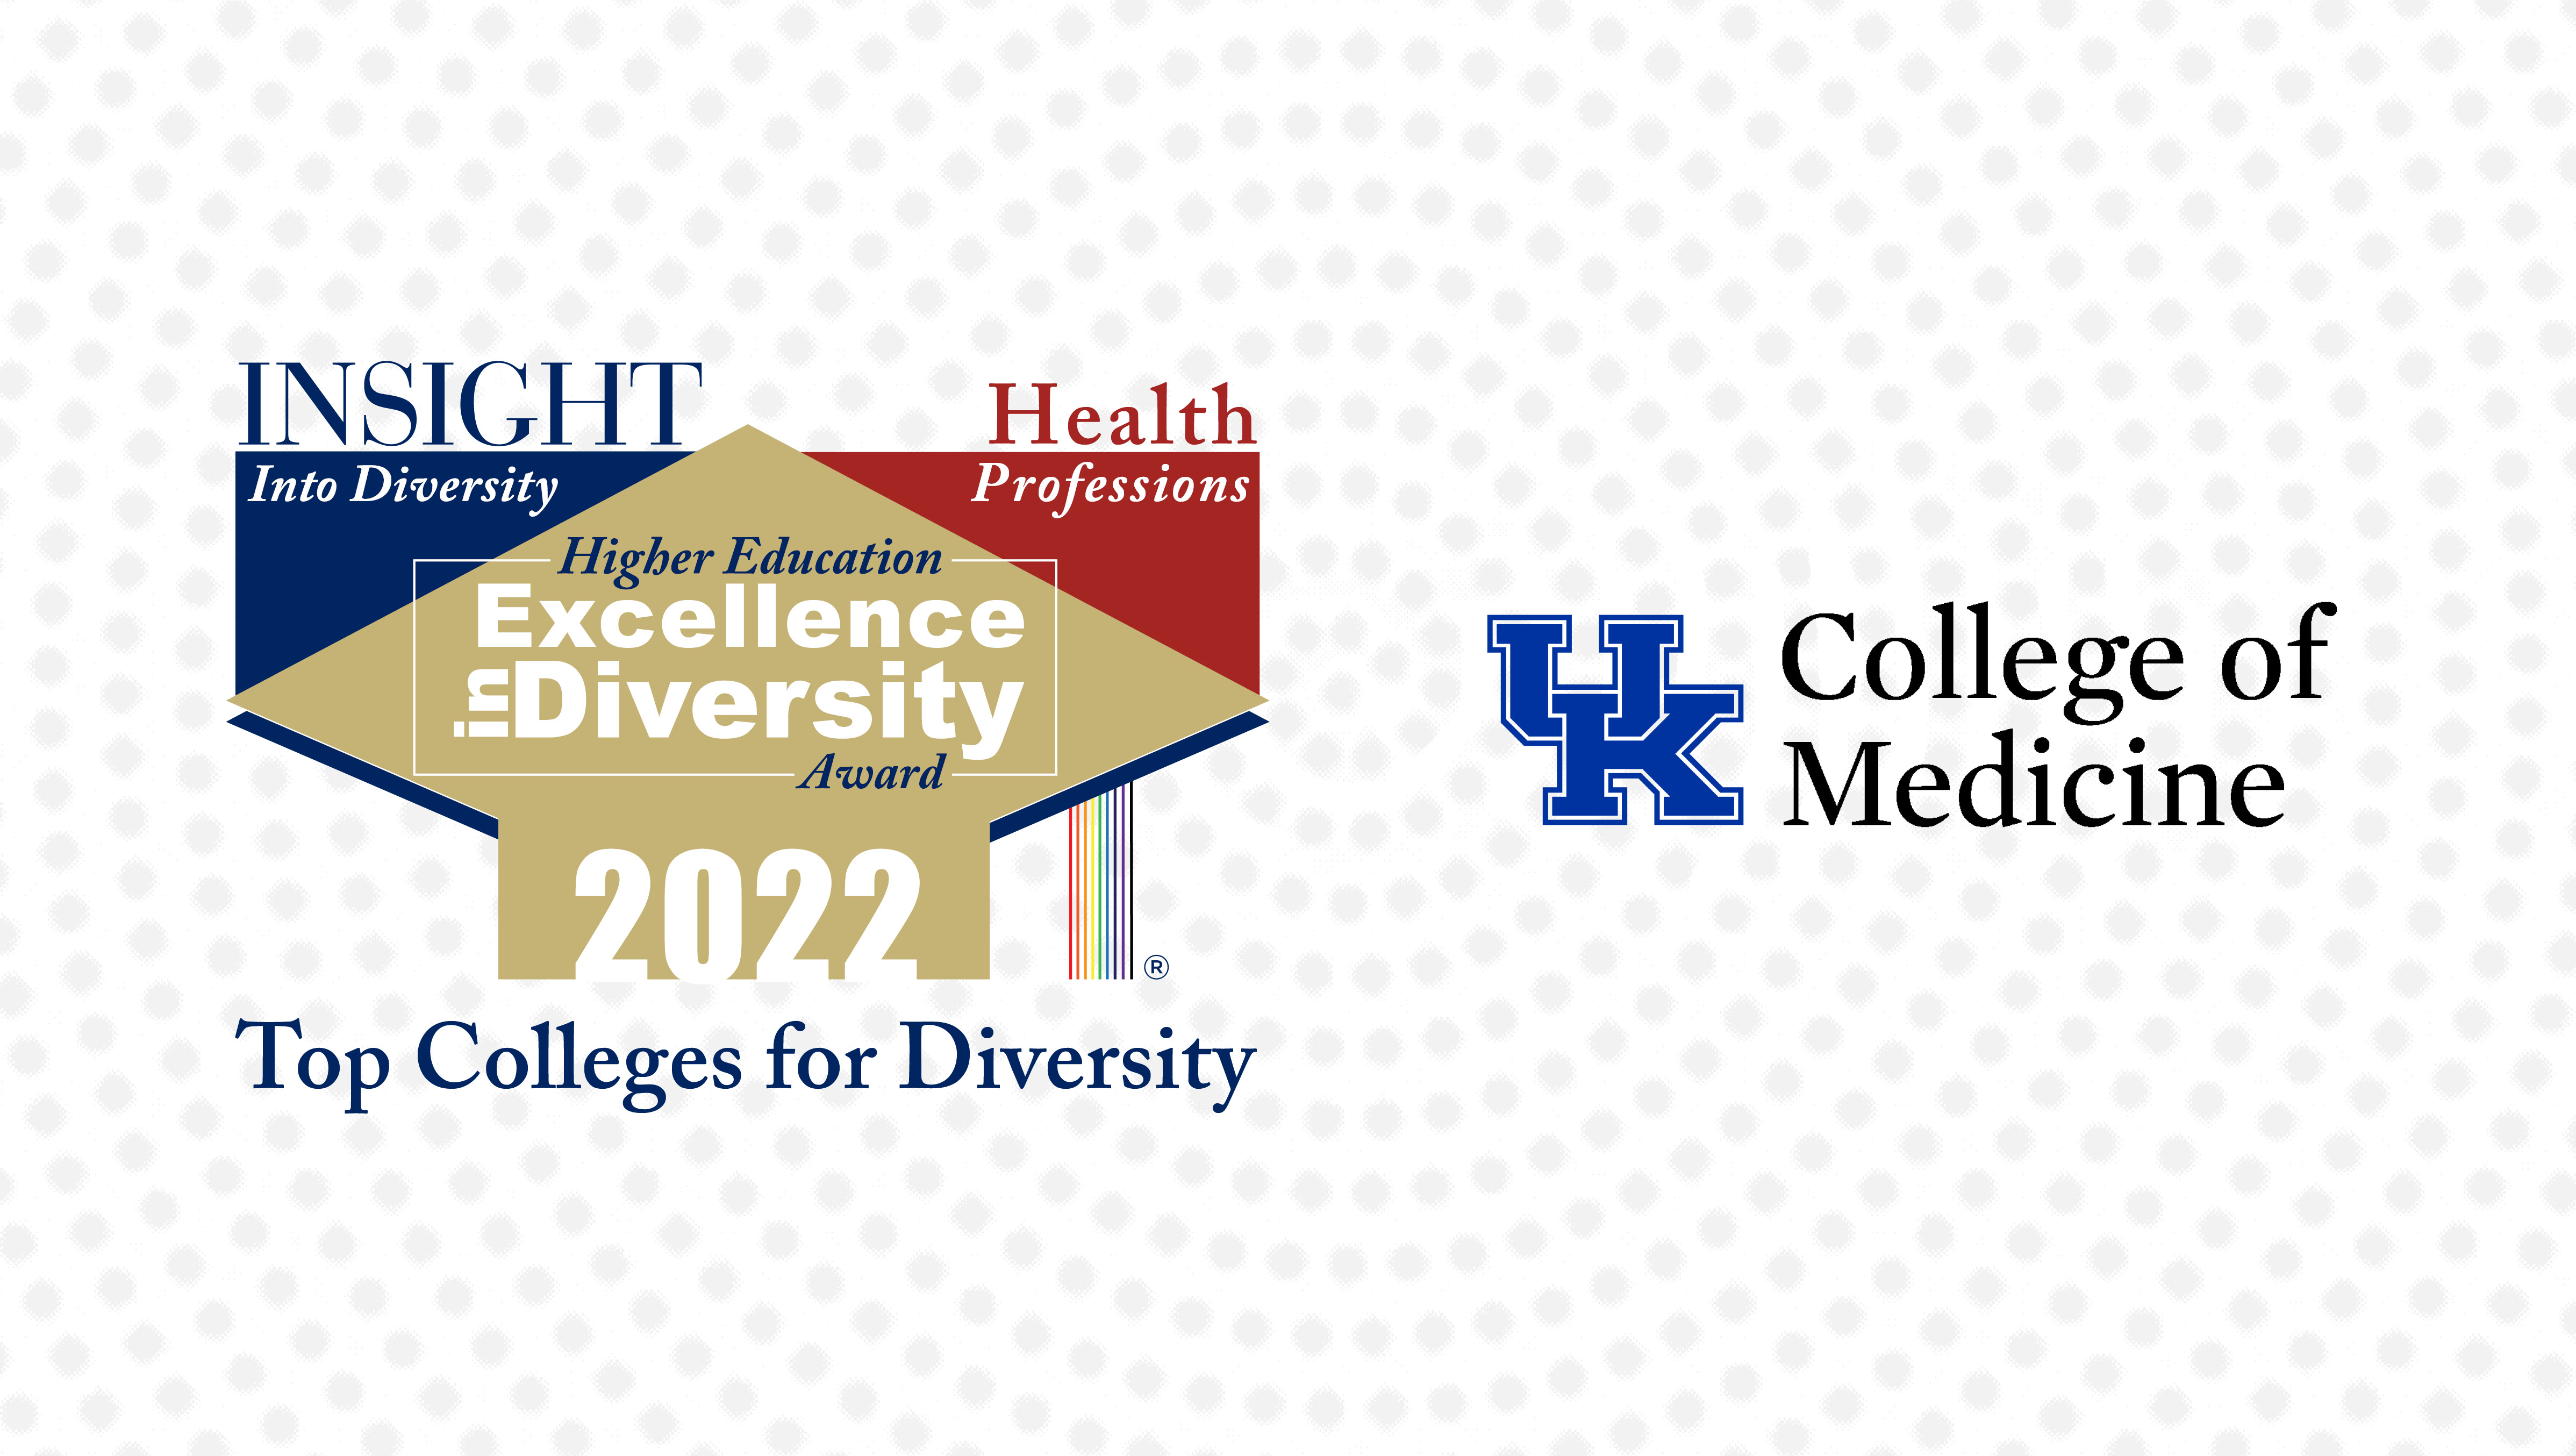 College of Medicine and HEED Award logos 